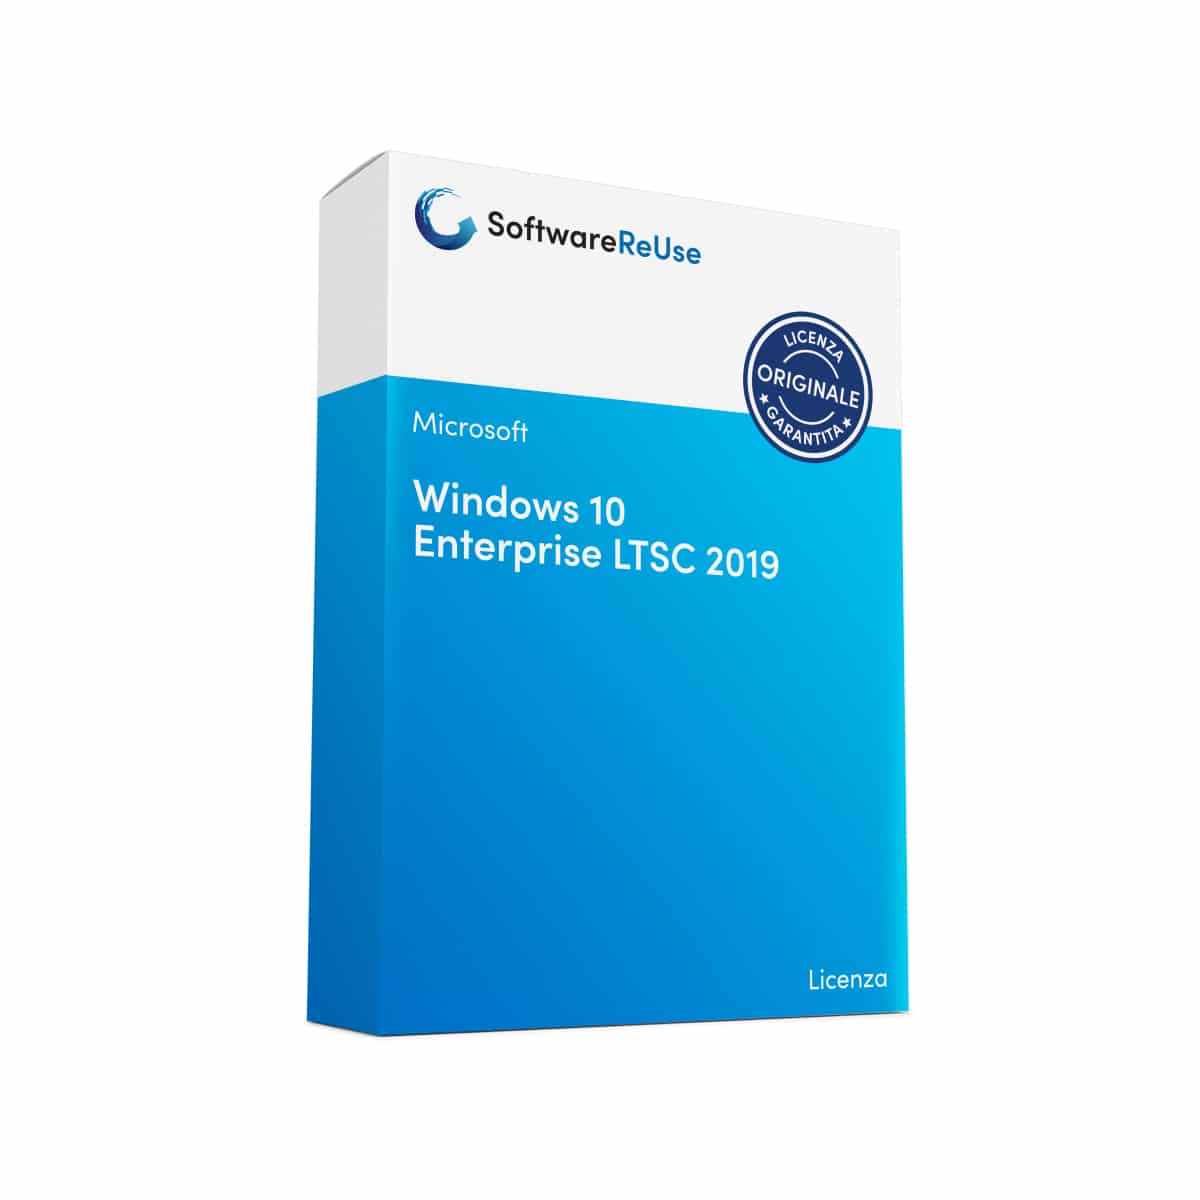 Windows 10 Enterprise LTSB 2019 – IT